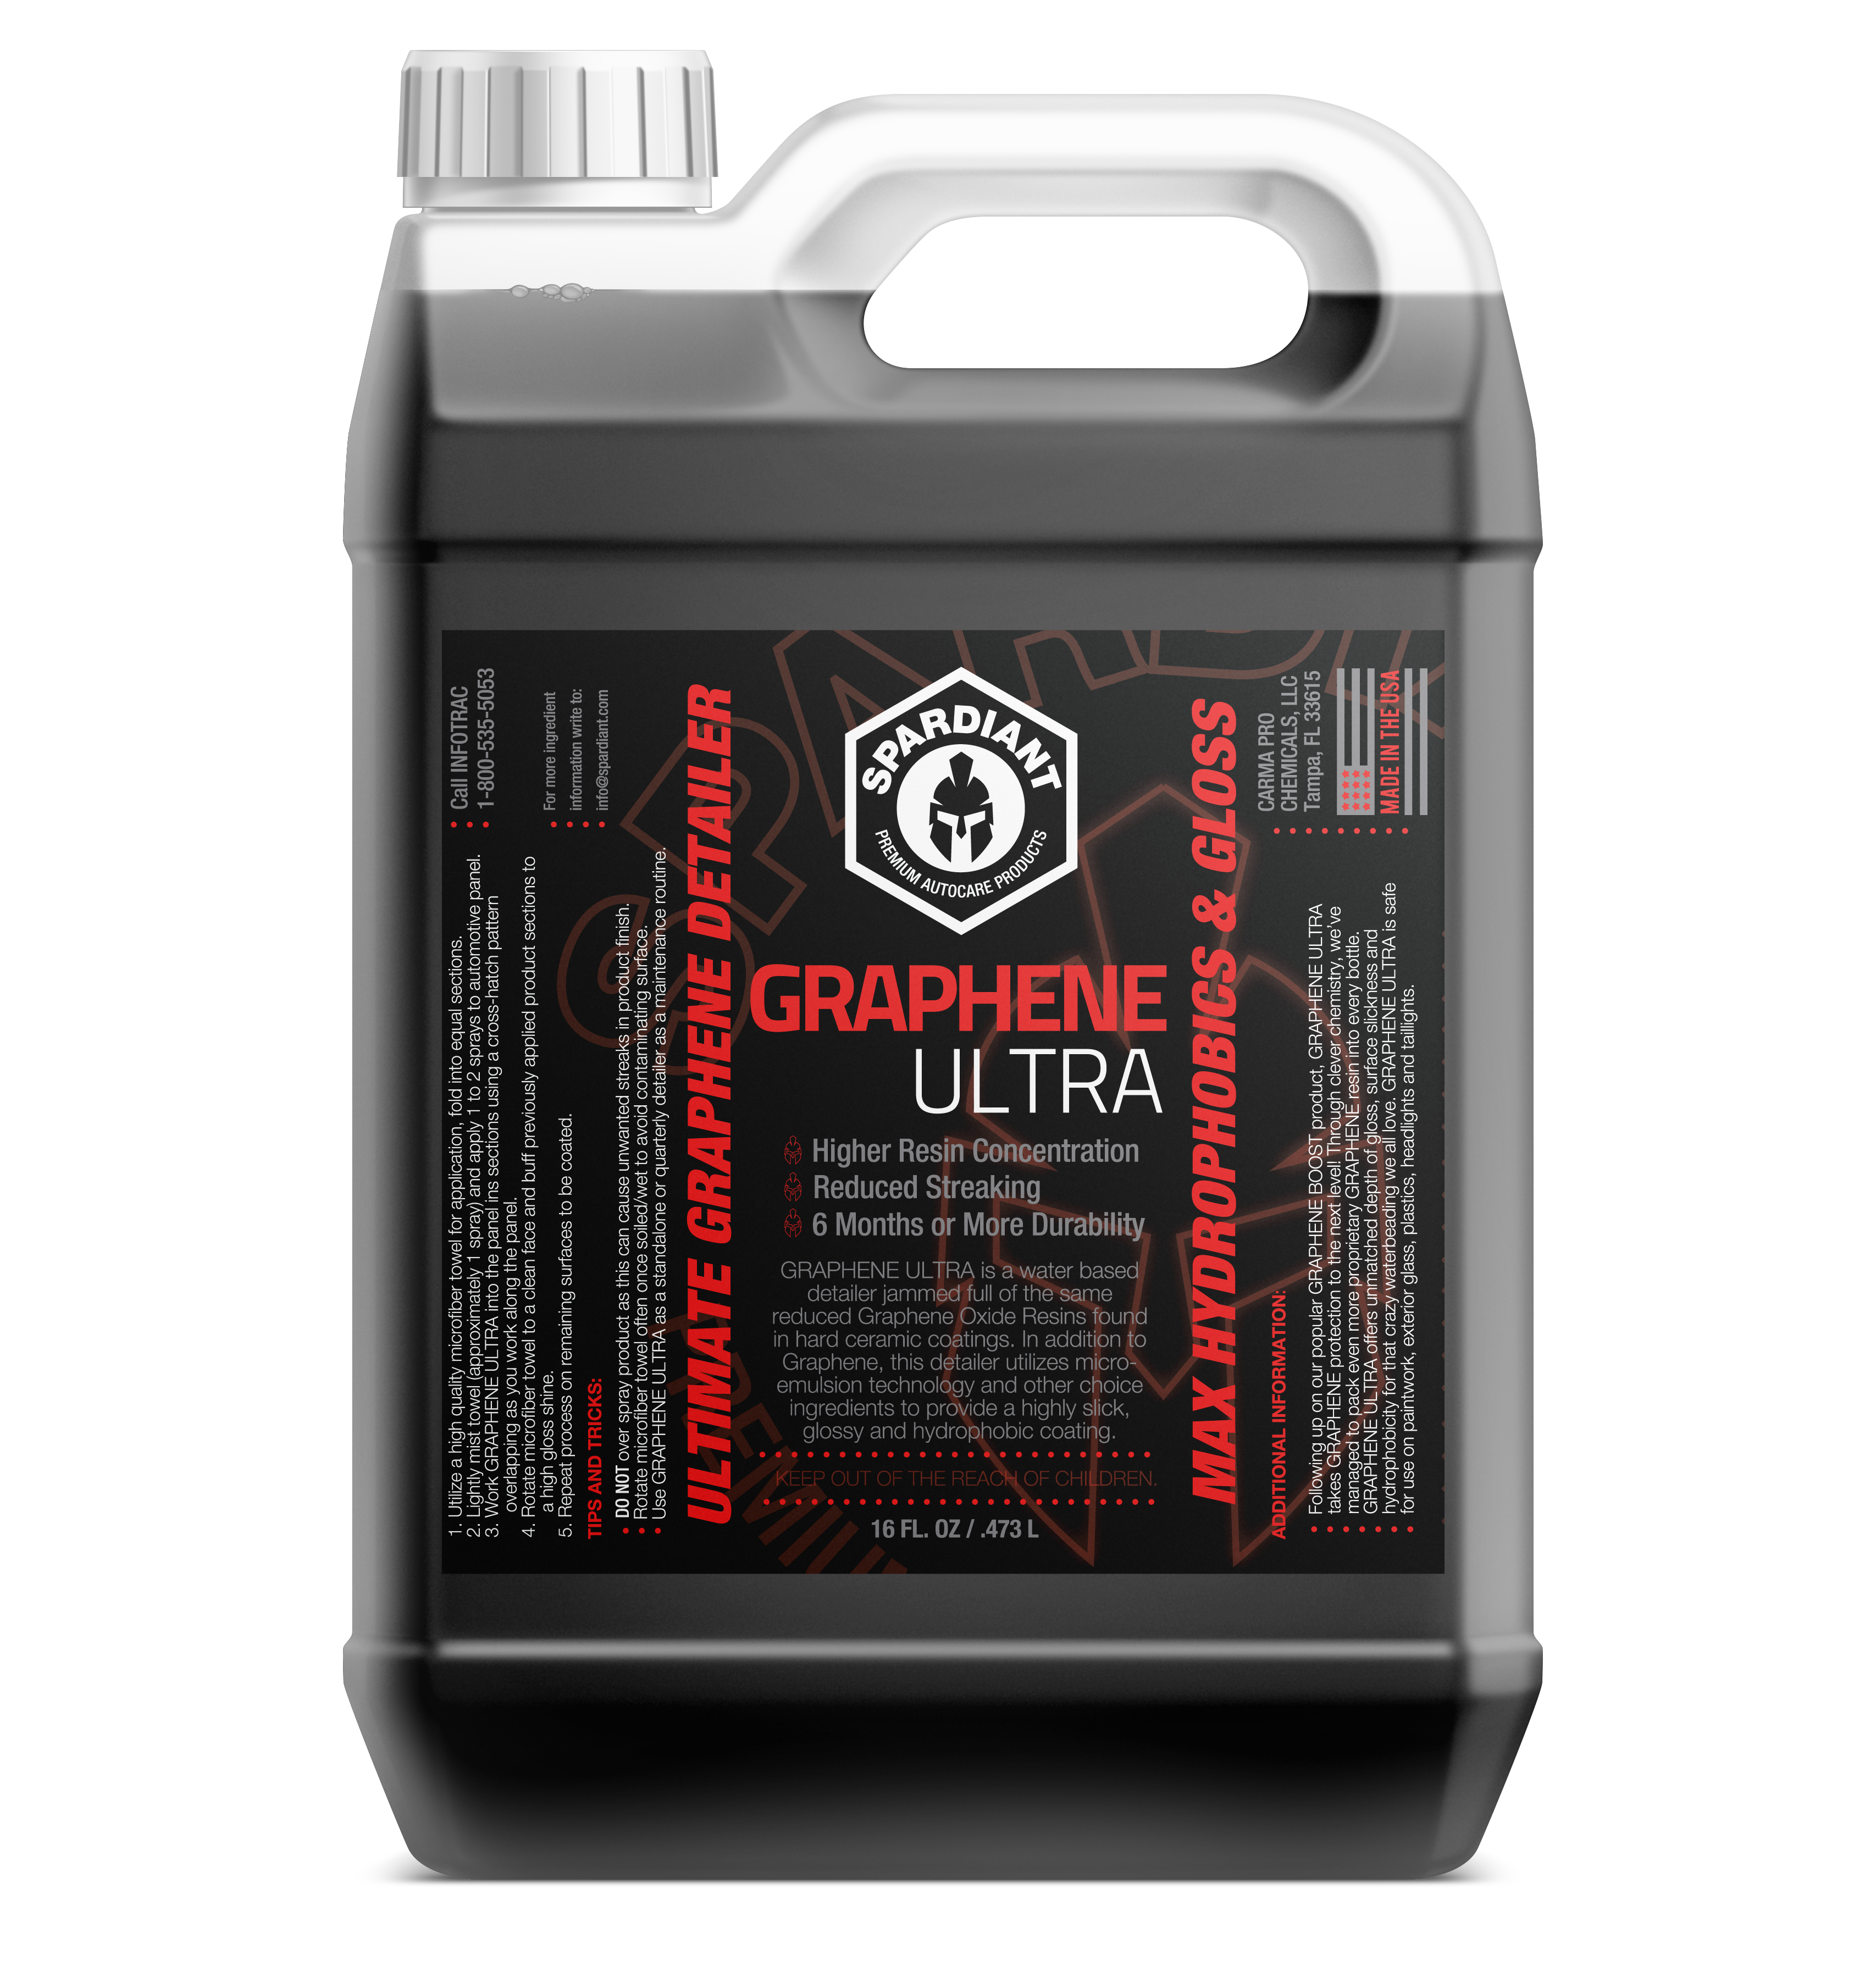 GRAPHENE ULTRA - SPARDIANT Graphene Ceramic Spray